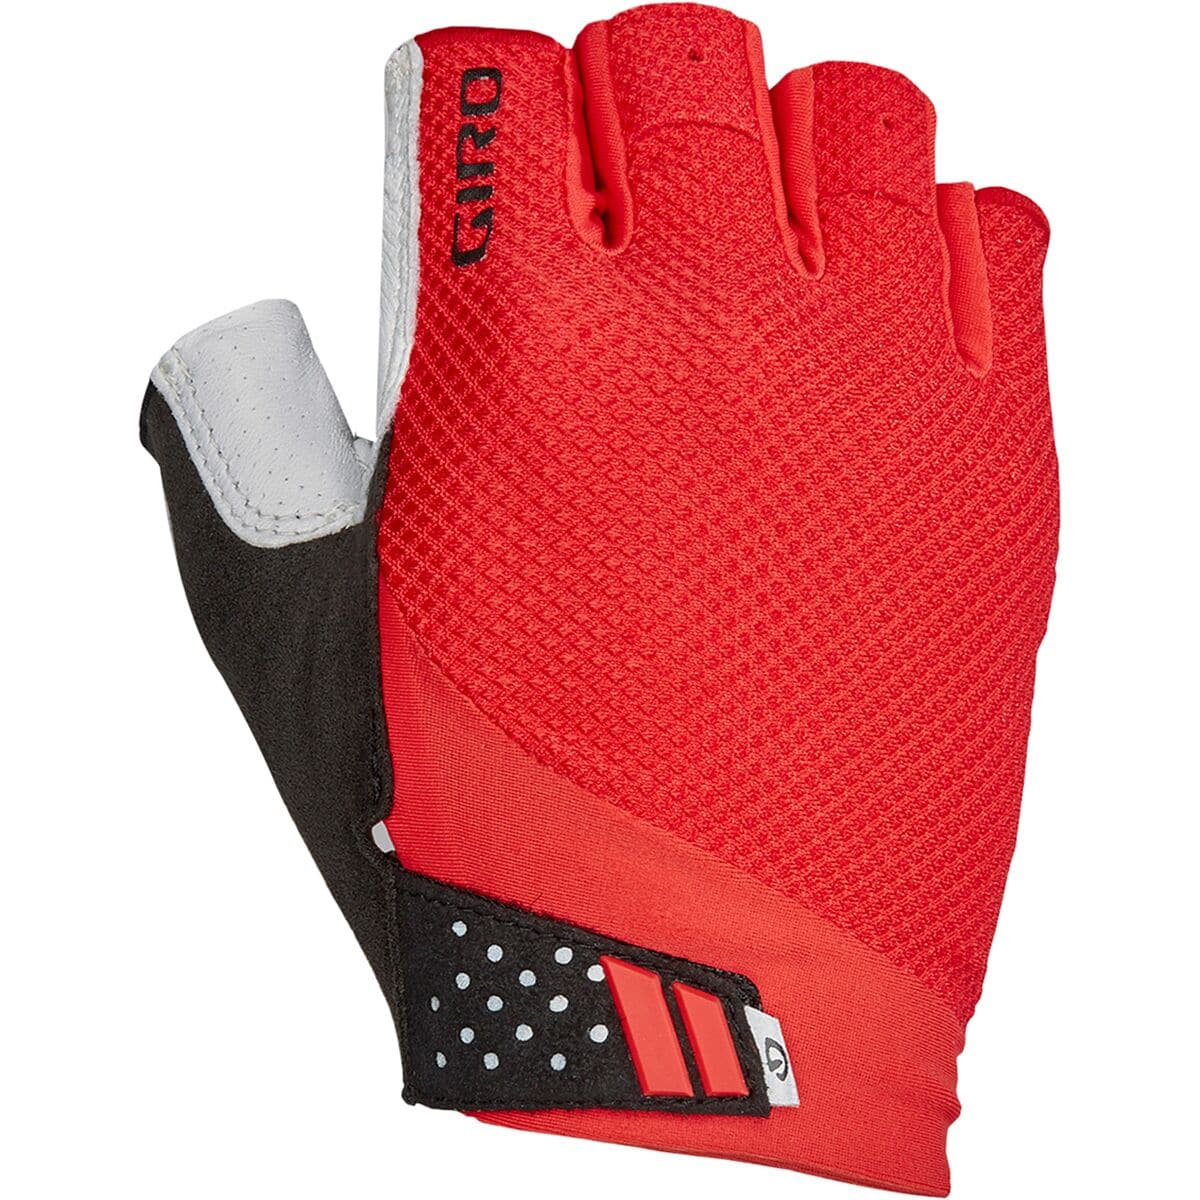 Giro Monaco II Gel Glove - Men's Bright Red, S